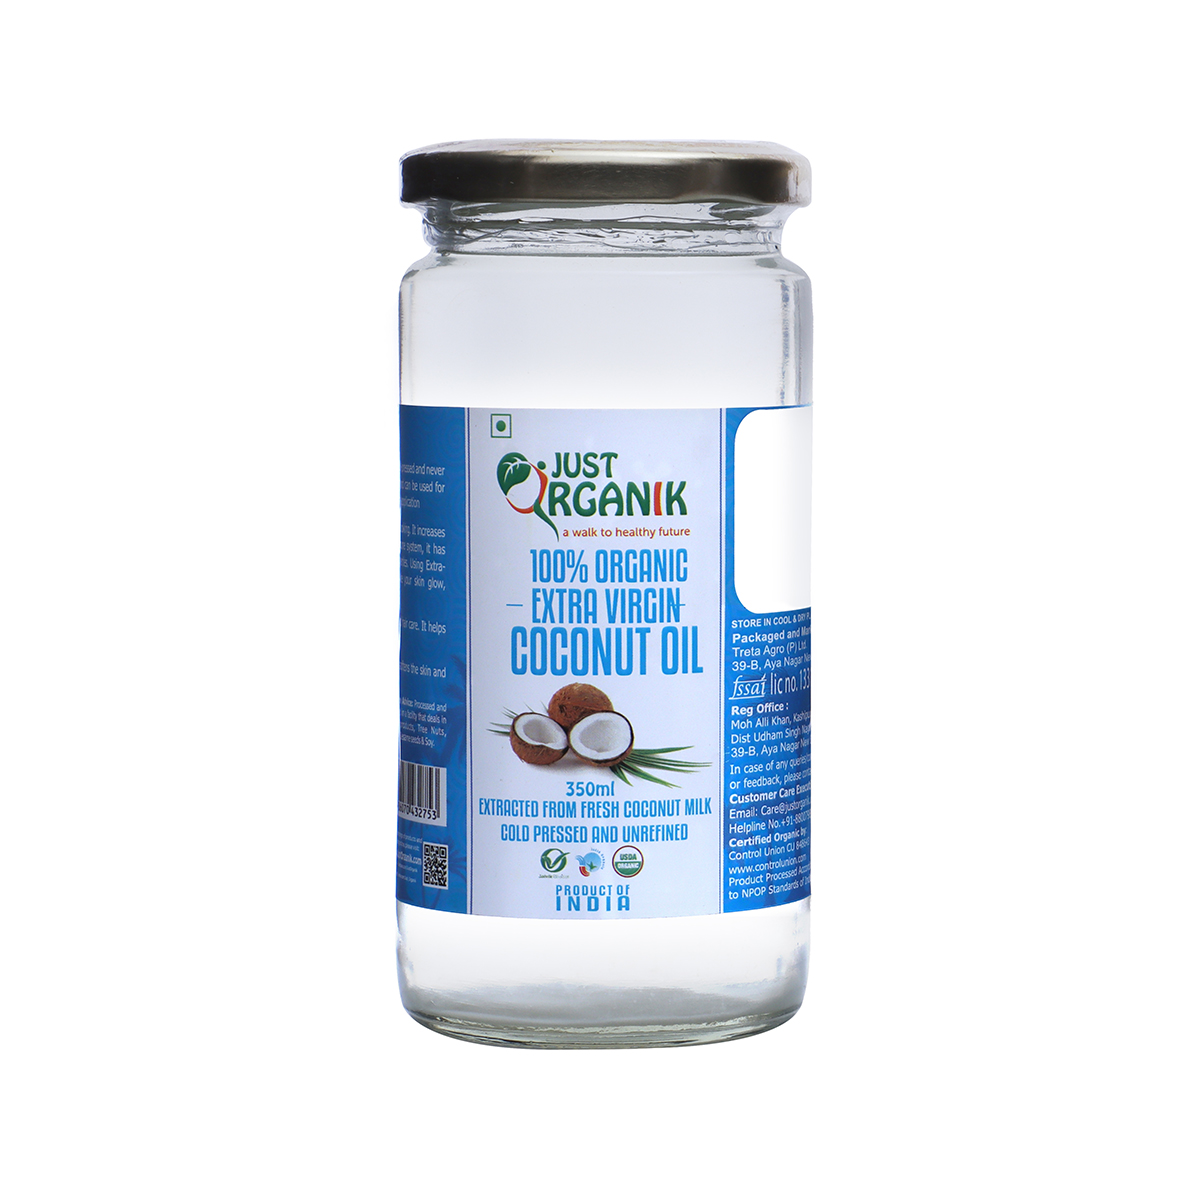 Just Organik Organic Extra Virgin Coconut Oil 350ml